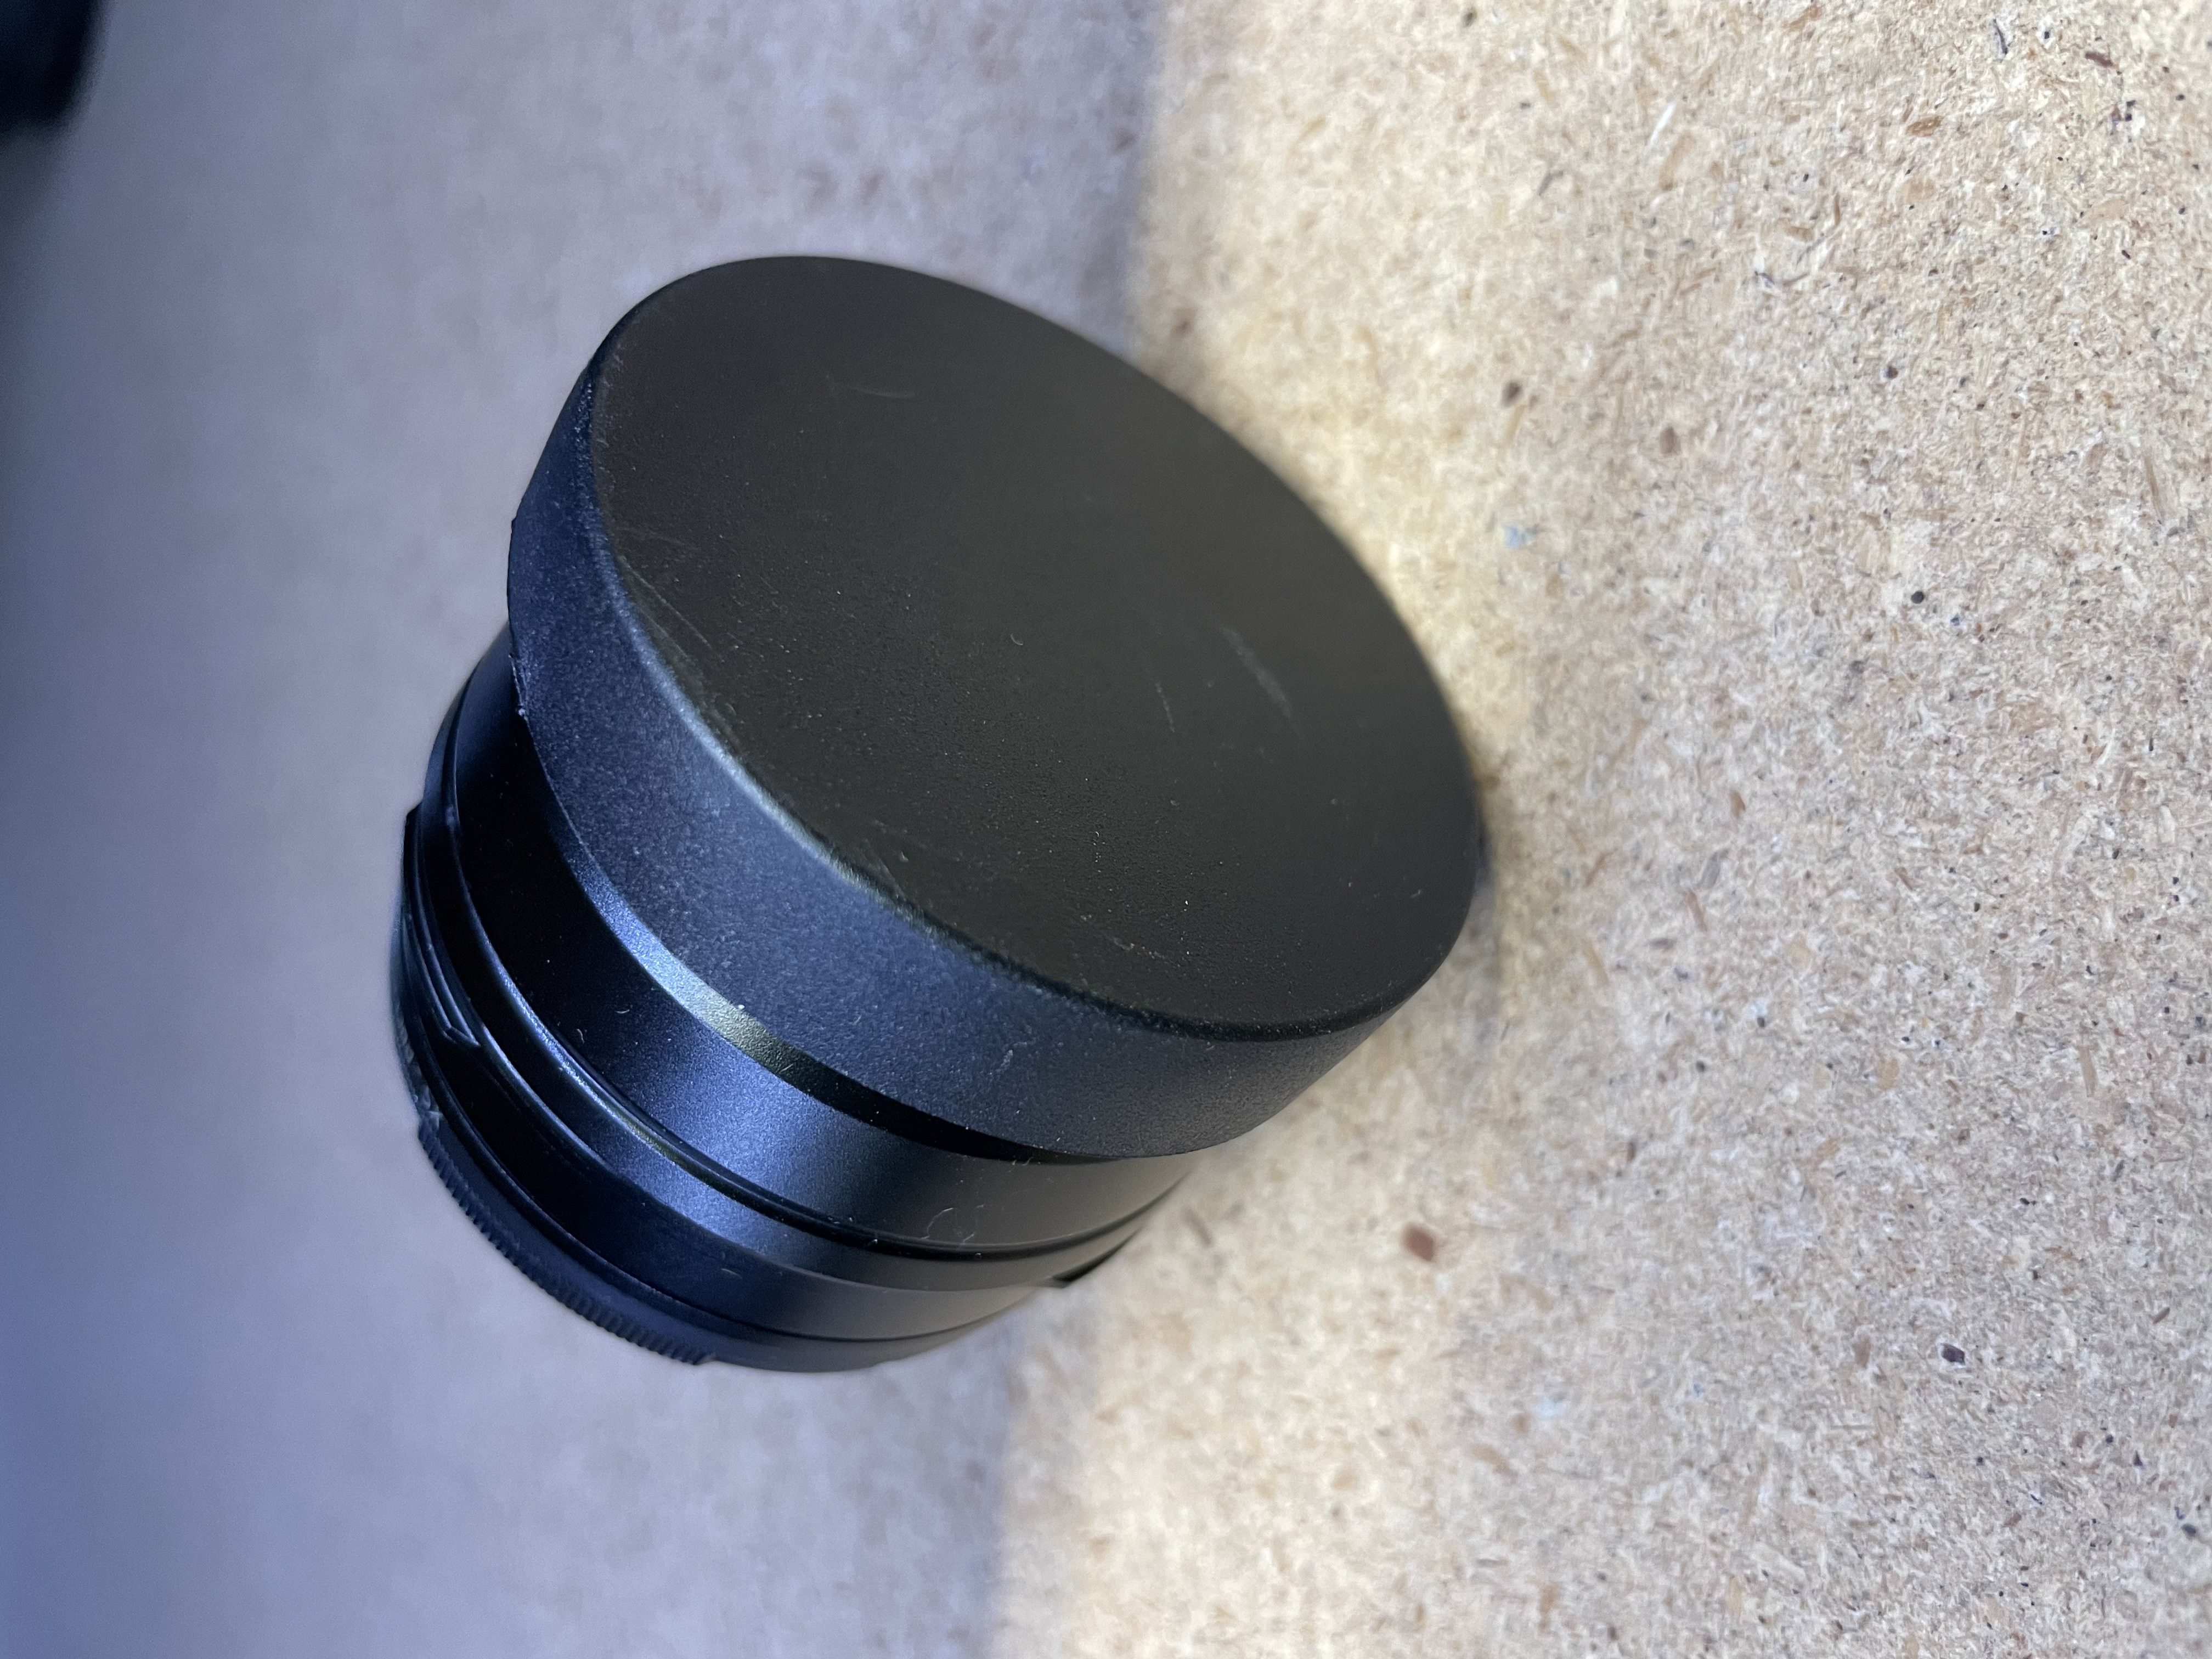 Fuji WCL-X100 II Wide-Angle Lens Cap